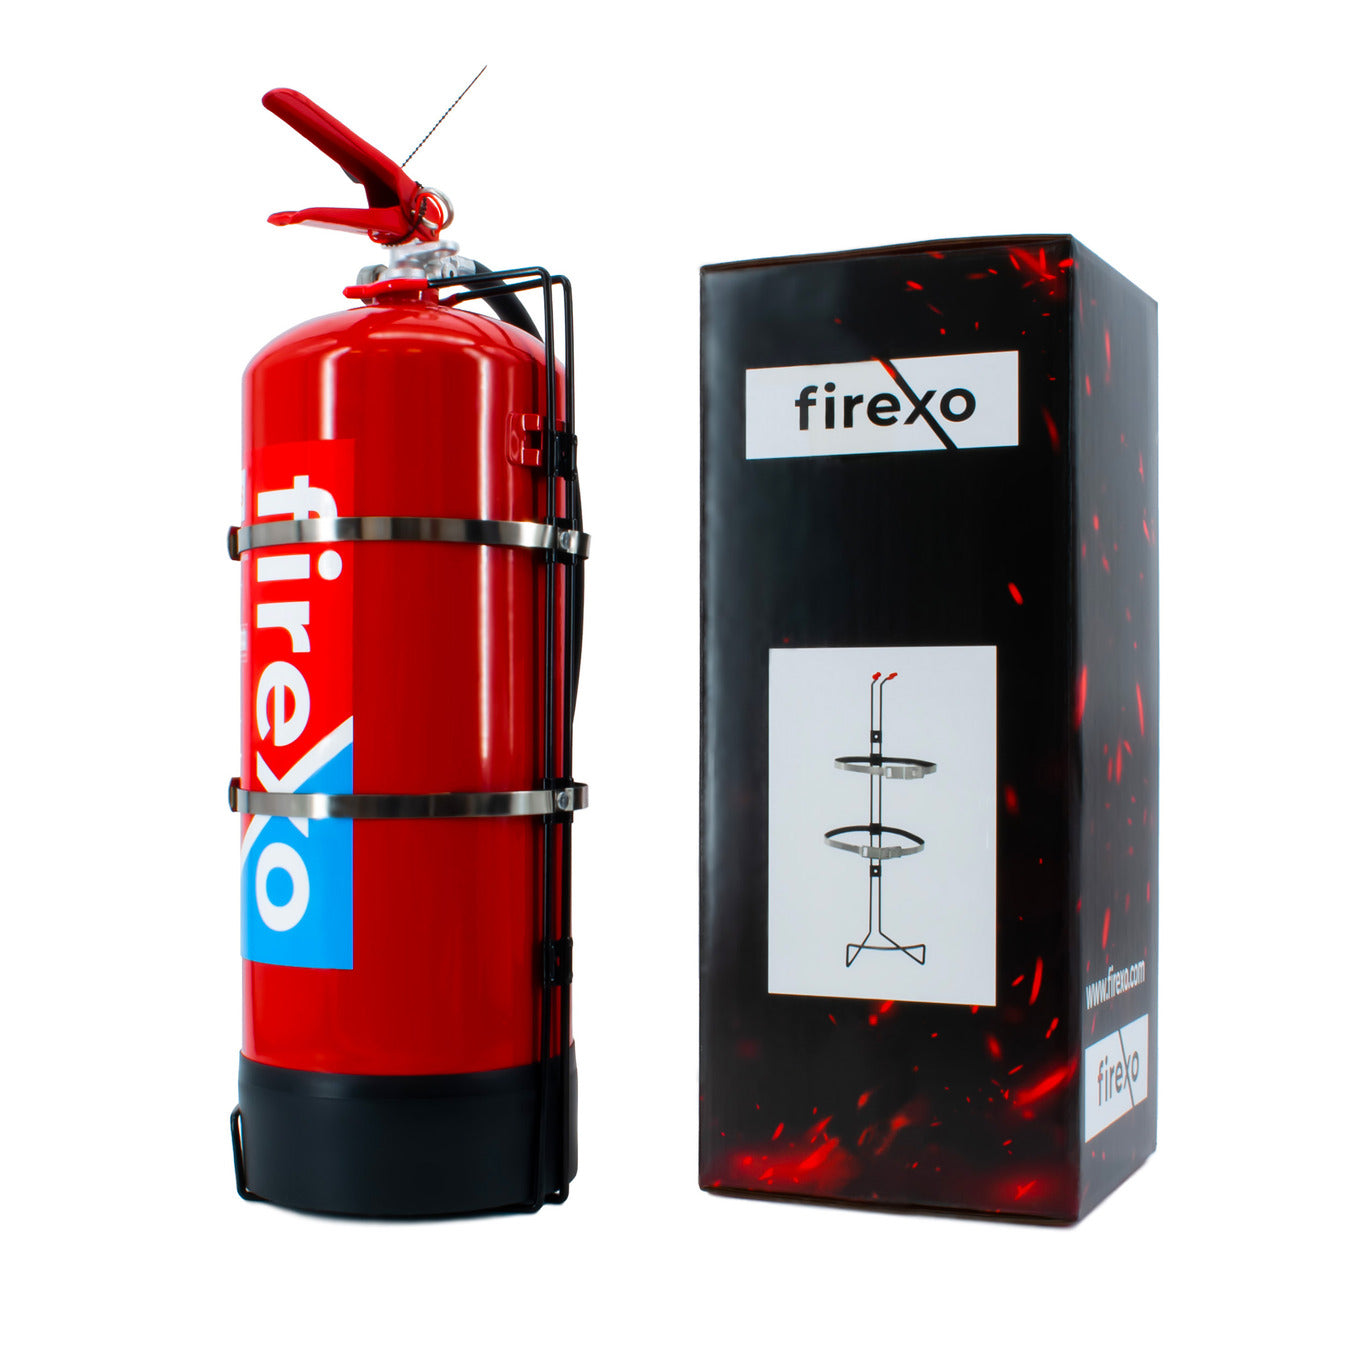 Firexo Bracket for 9L Fire Extinguisher